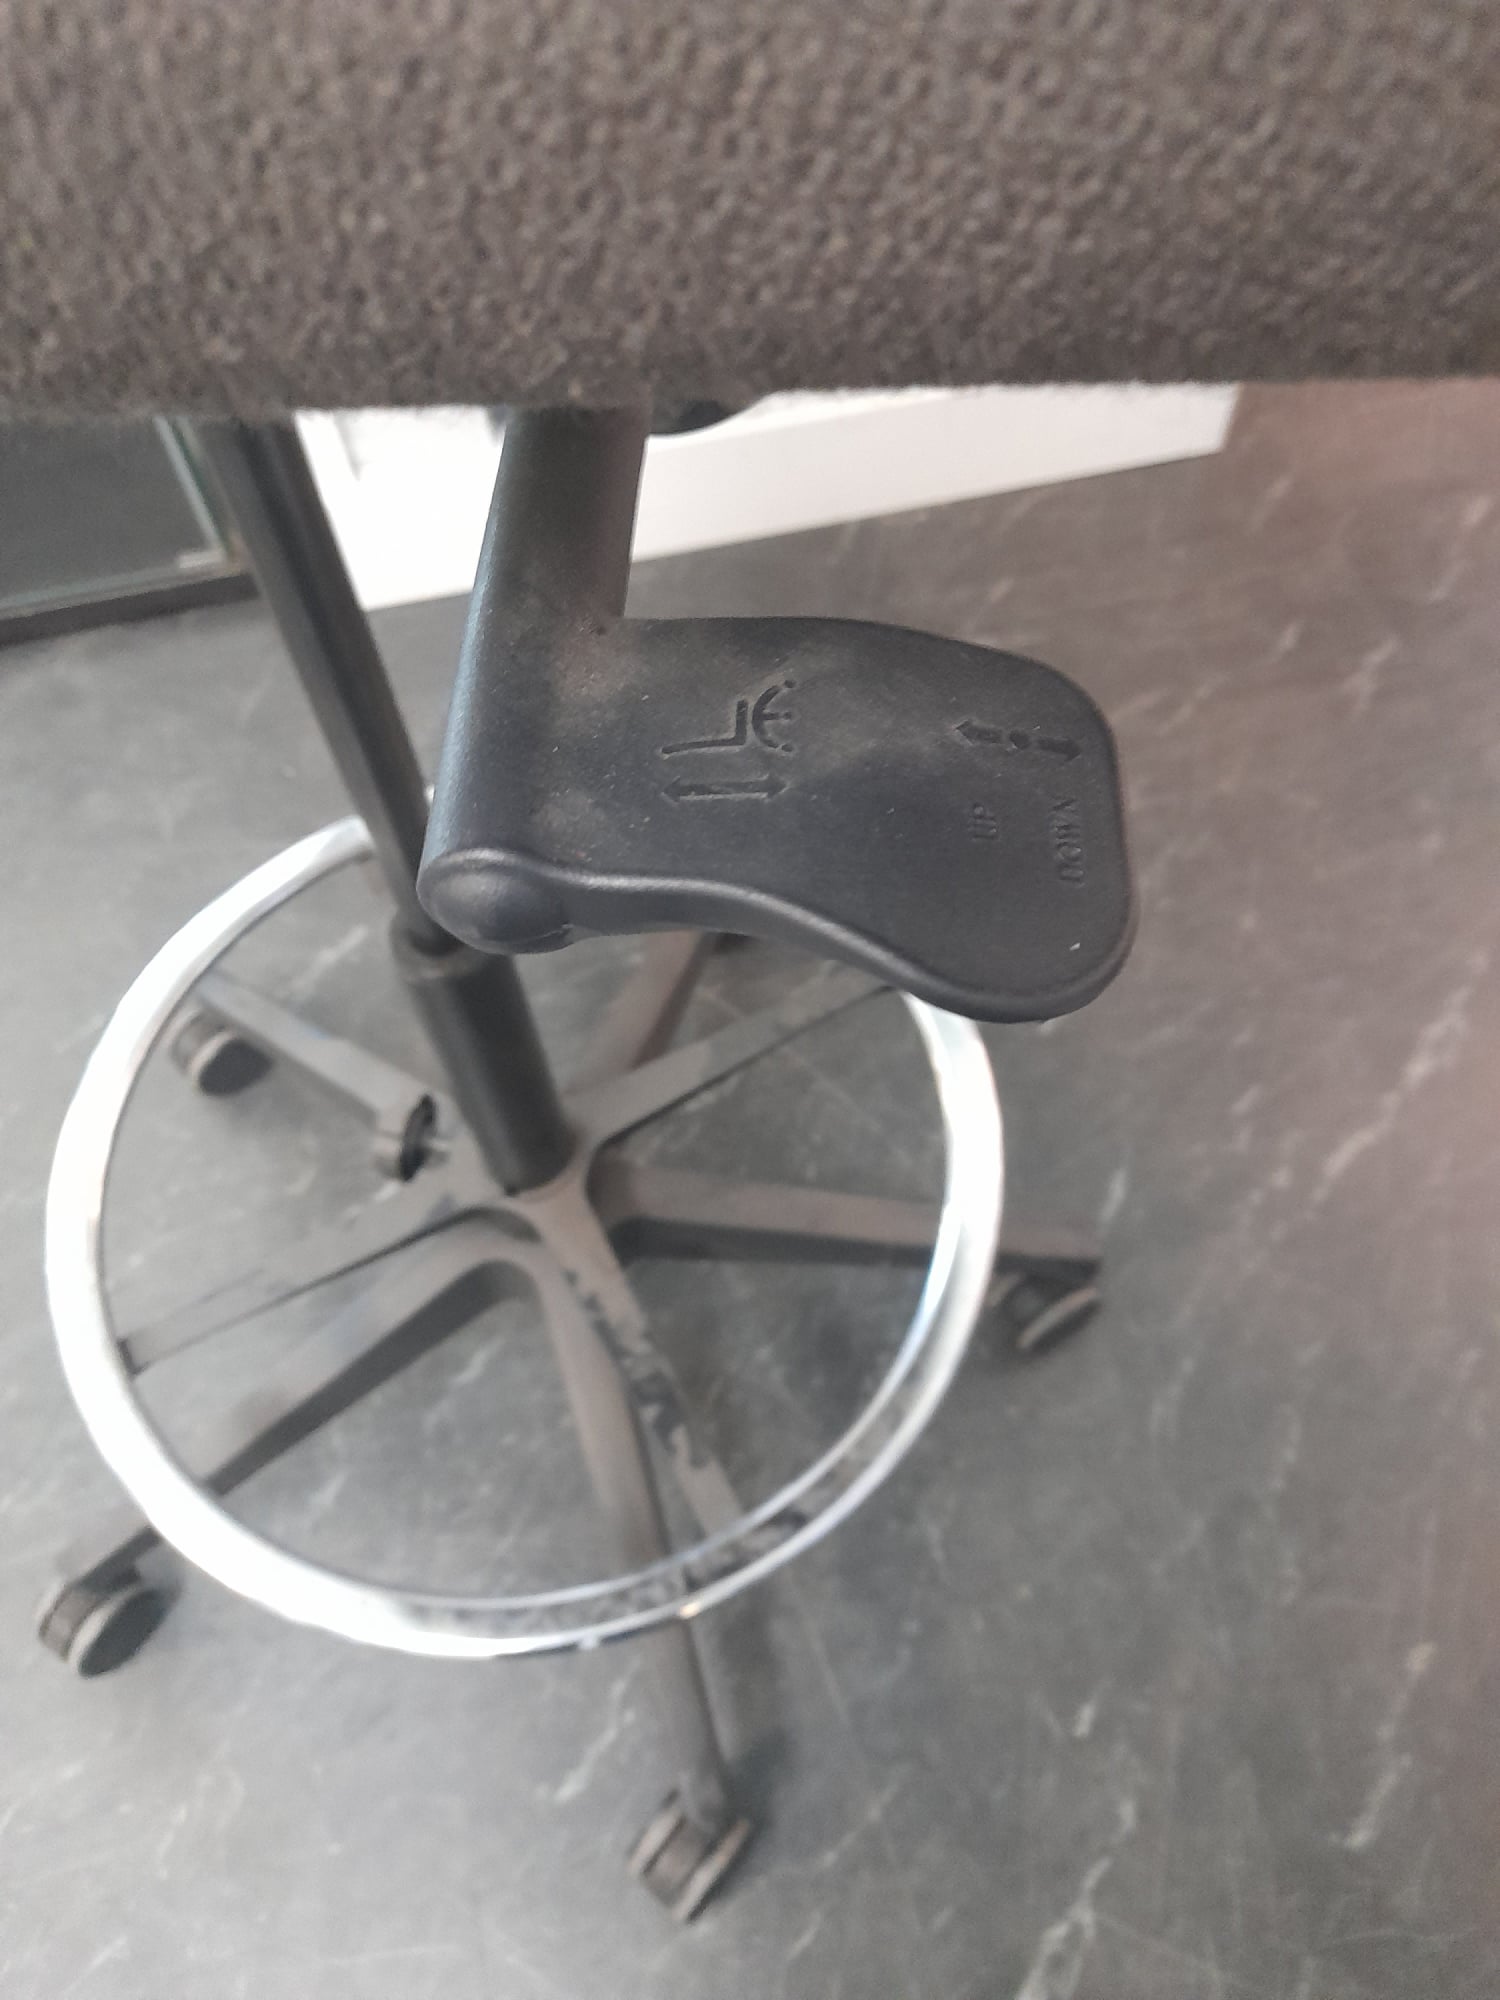 Mesh Back - High Task - Office Chair - Grey